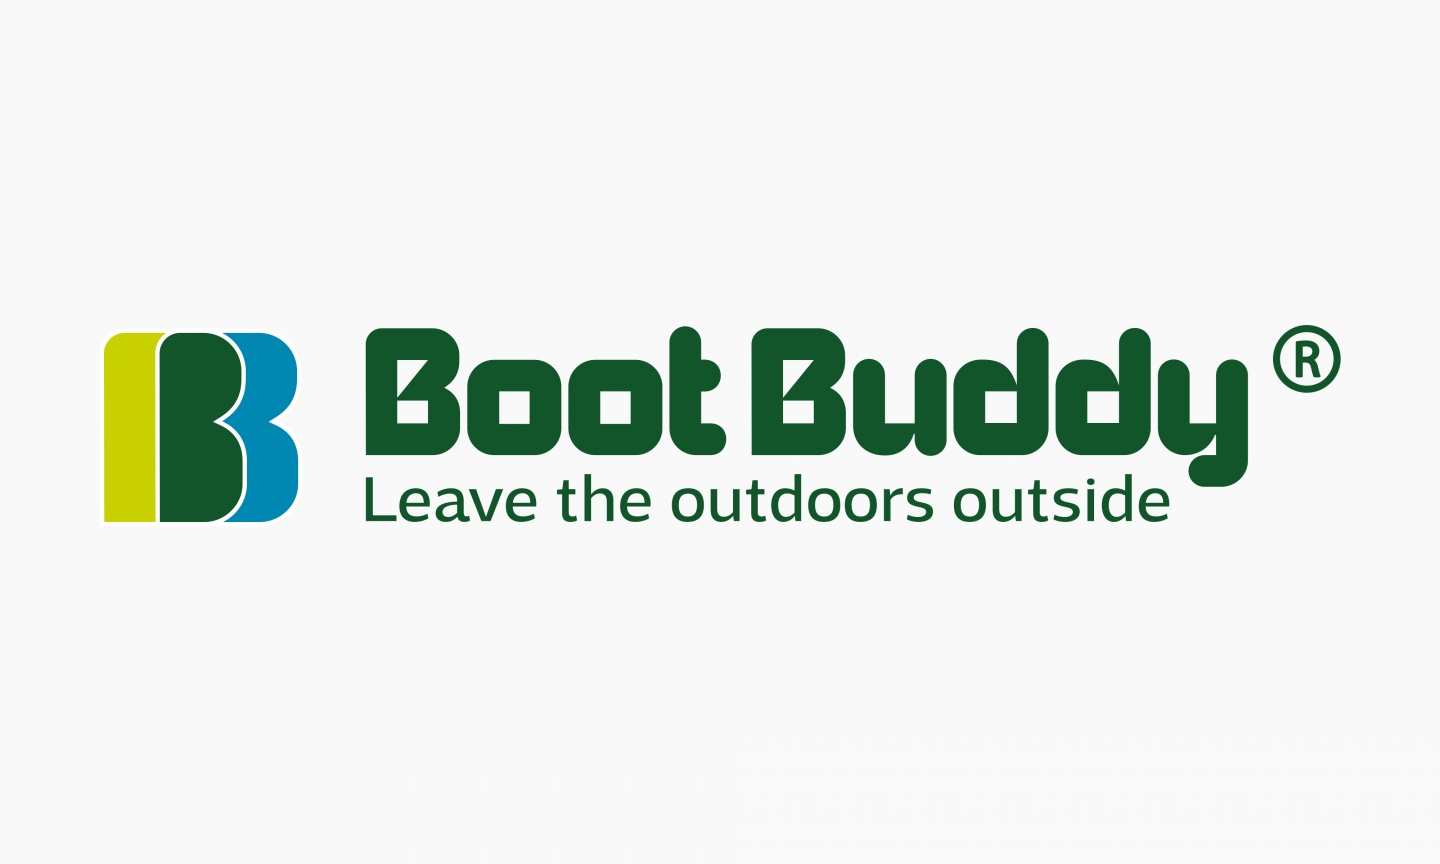 Boot Buddy Logo Design